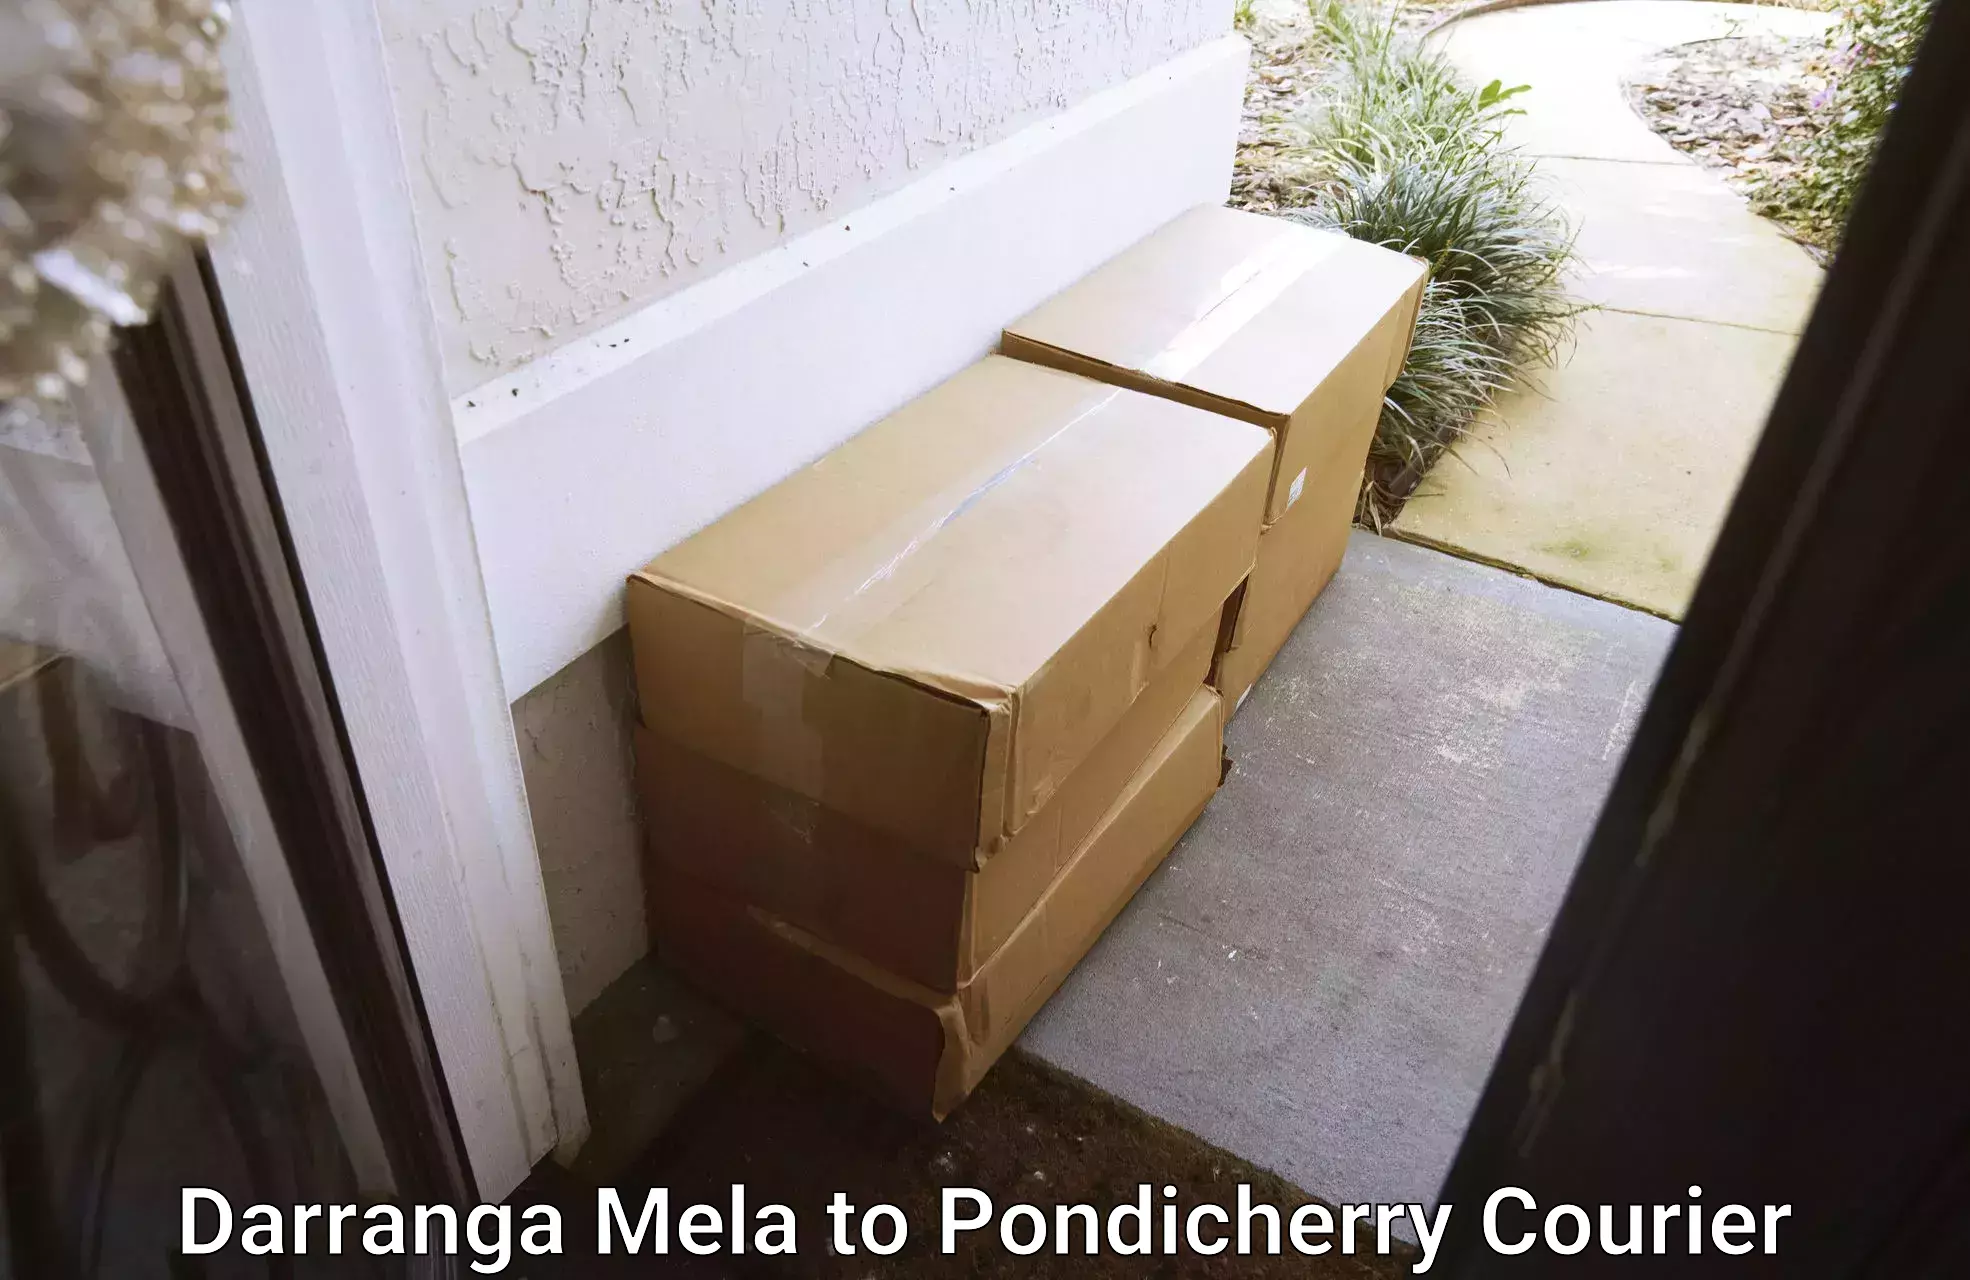 Customized delivery options in Darranga Mela to Pondicherry